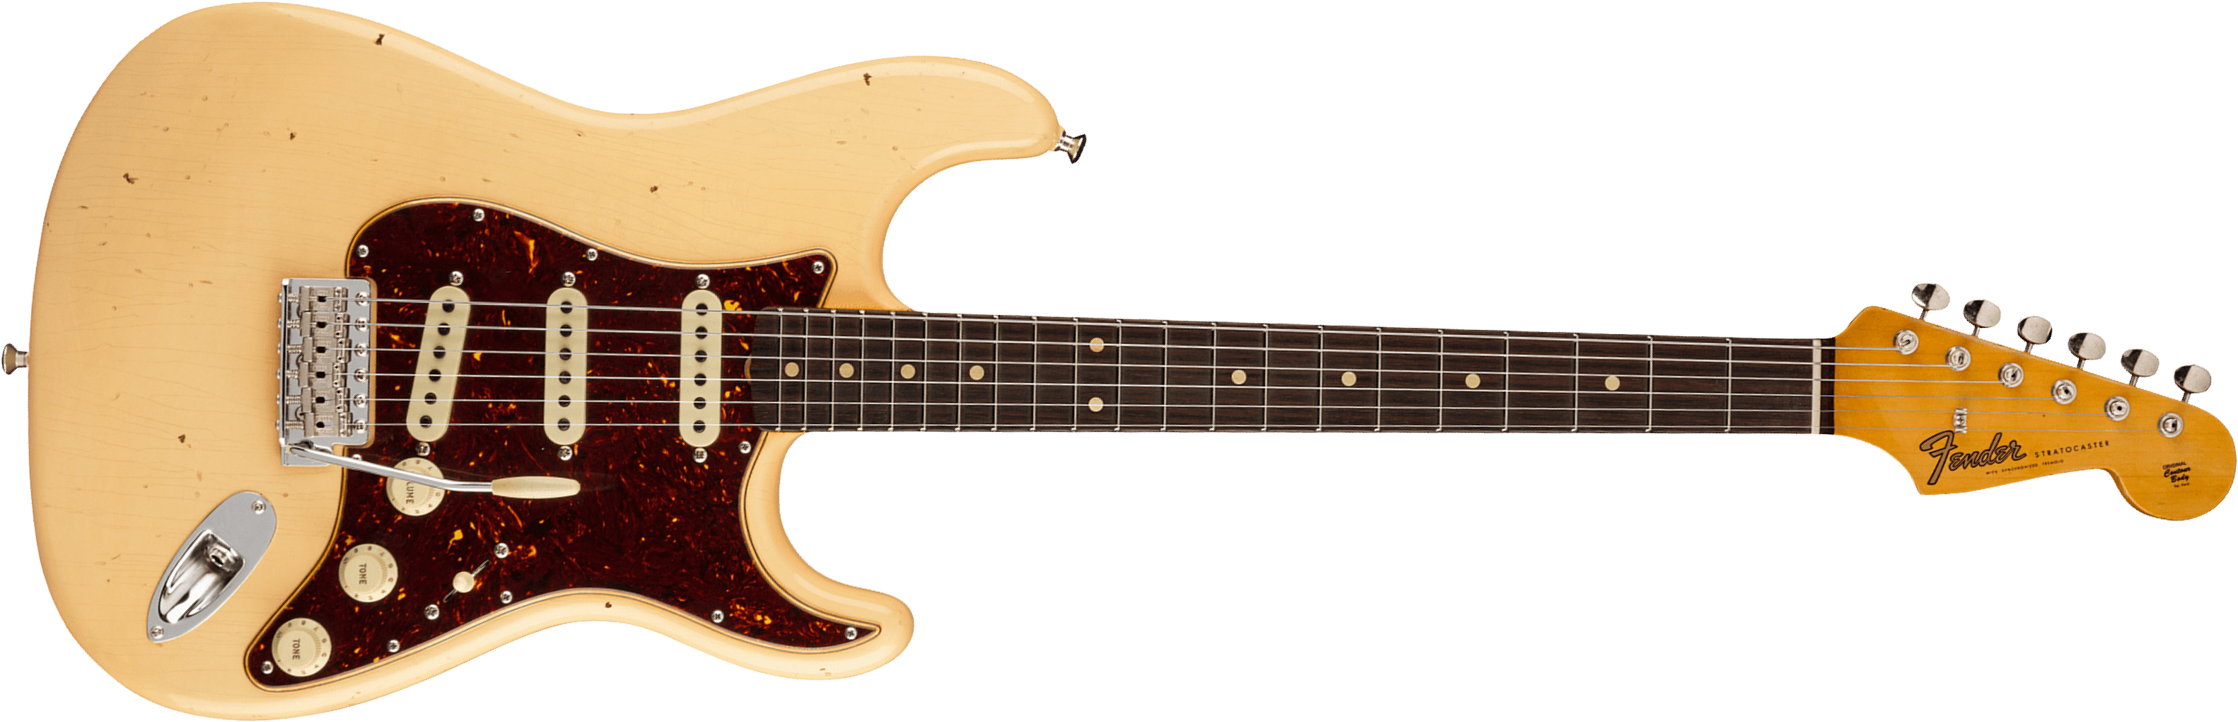 Fender Custom Shop Strat Postmodern Usa Rw - Journeyman Relic Vintage White - Guitare Électrique Forme Str - Main picture